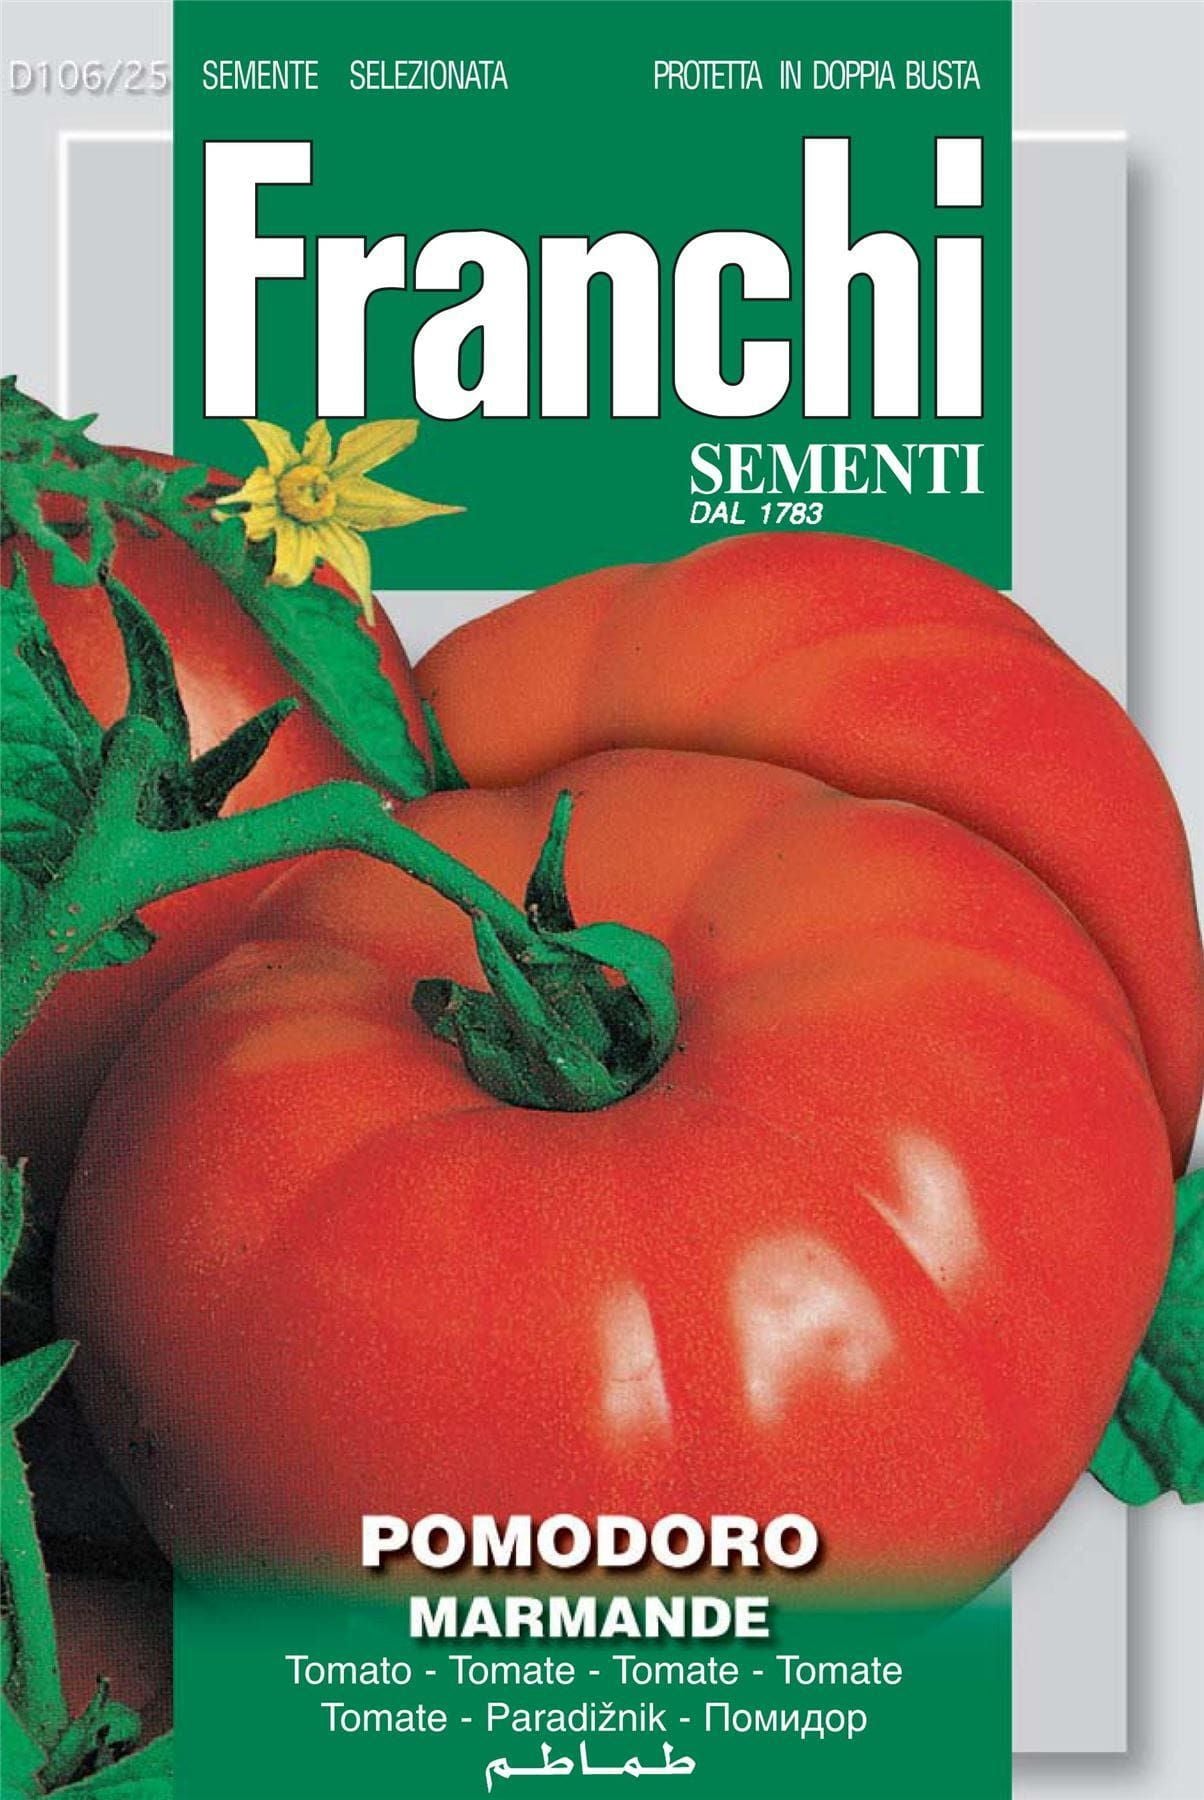 Franchi Seeds of Italy - DBO 106/25 - Tomato - Marmande - Seeds